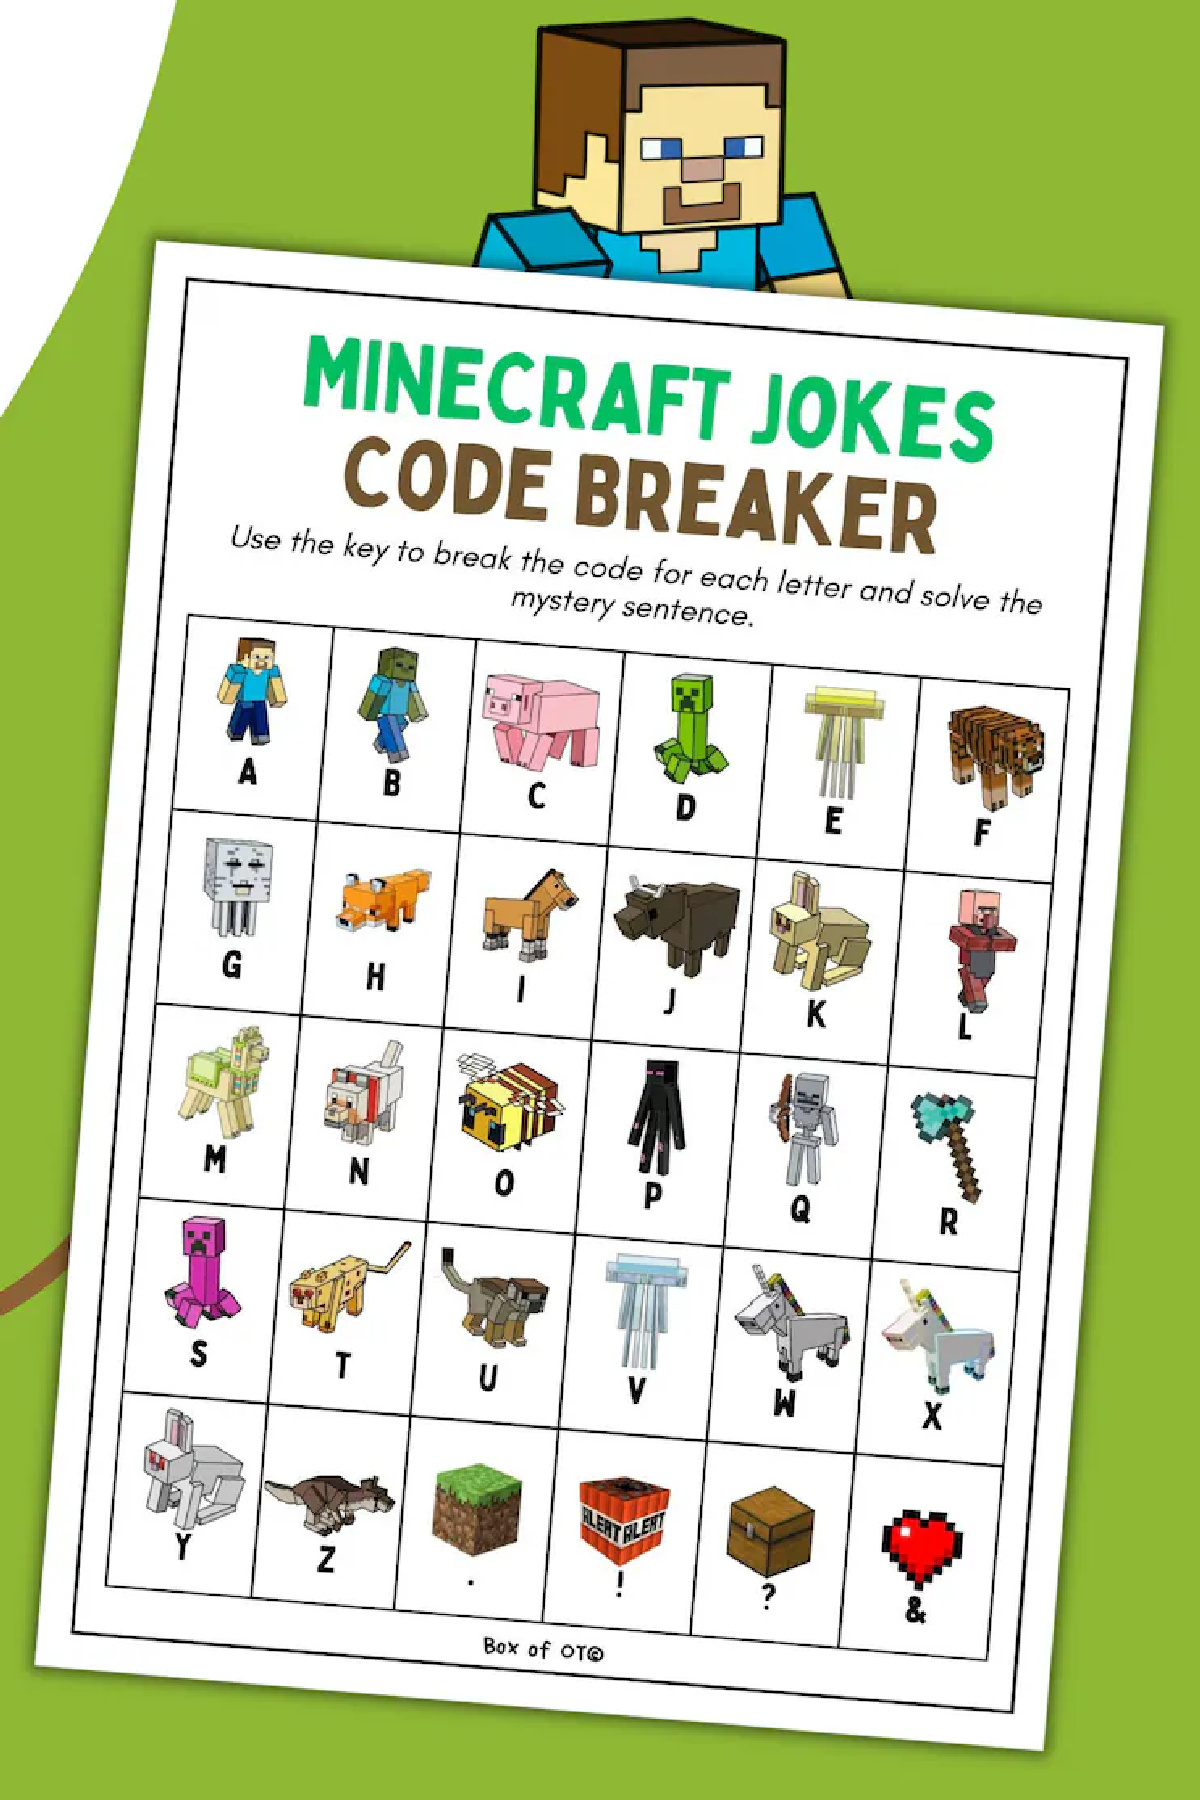 Minecraft Code Breaker Jokes